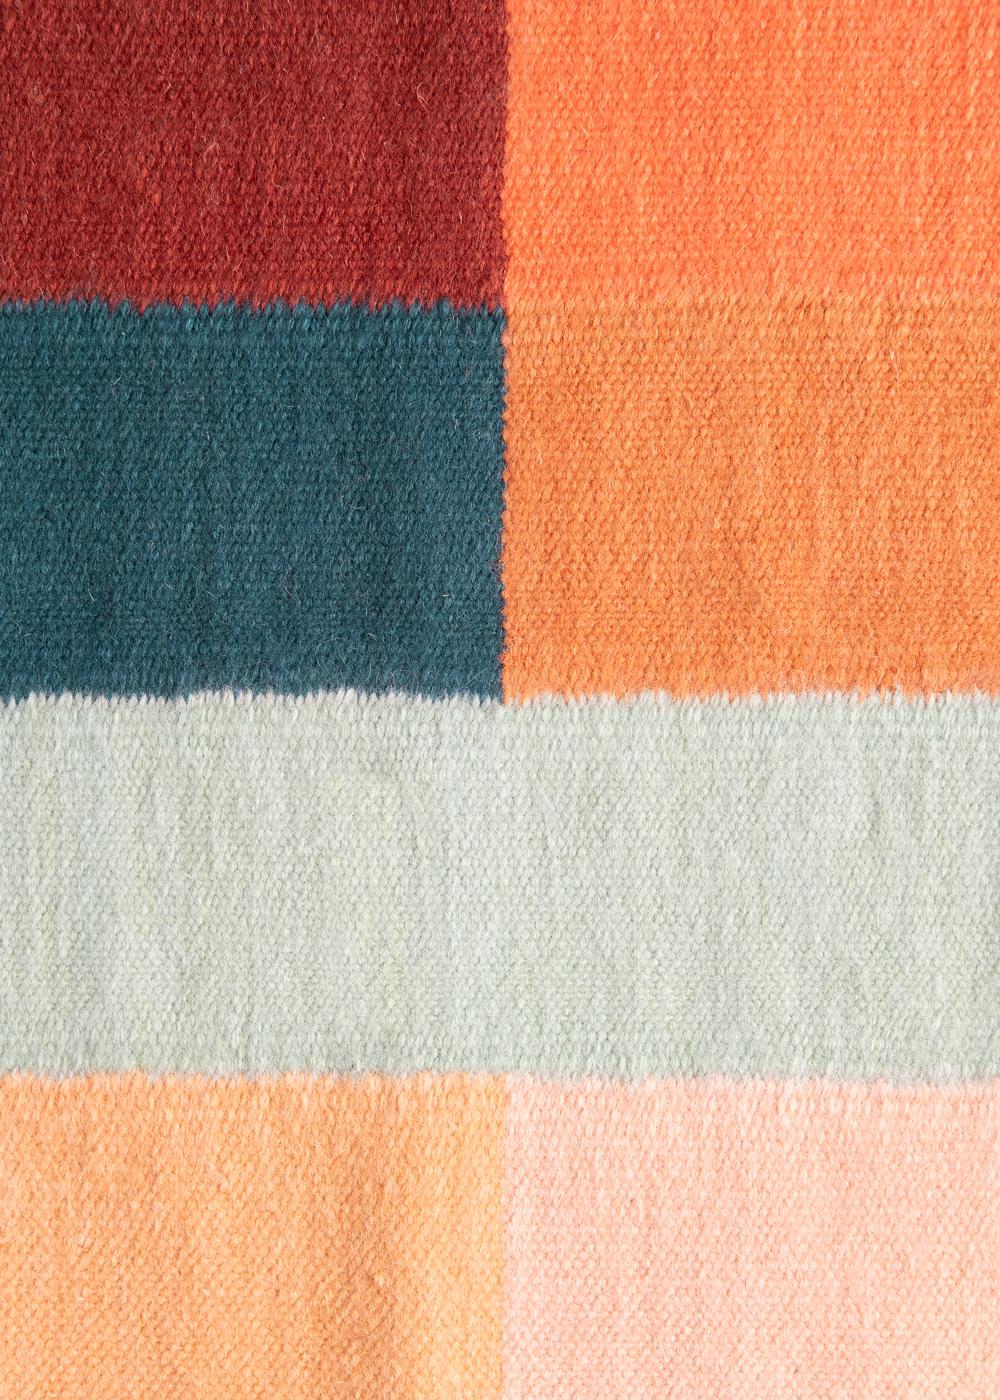 Modern Dune - Design Kilim Rug Liver Studio Milan Wool Carpet Cotton Handwoven For Sale